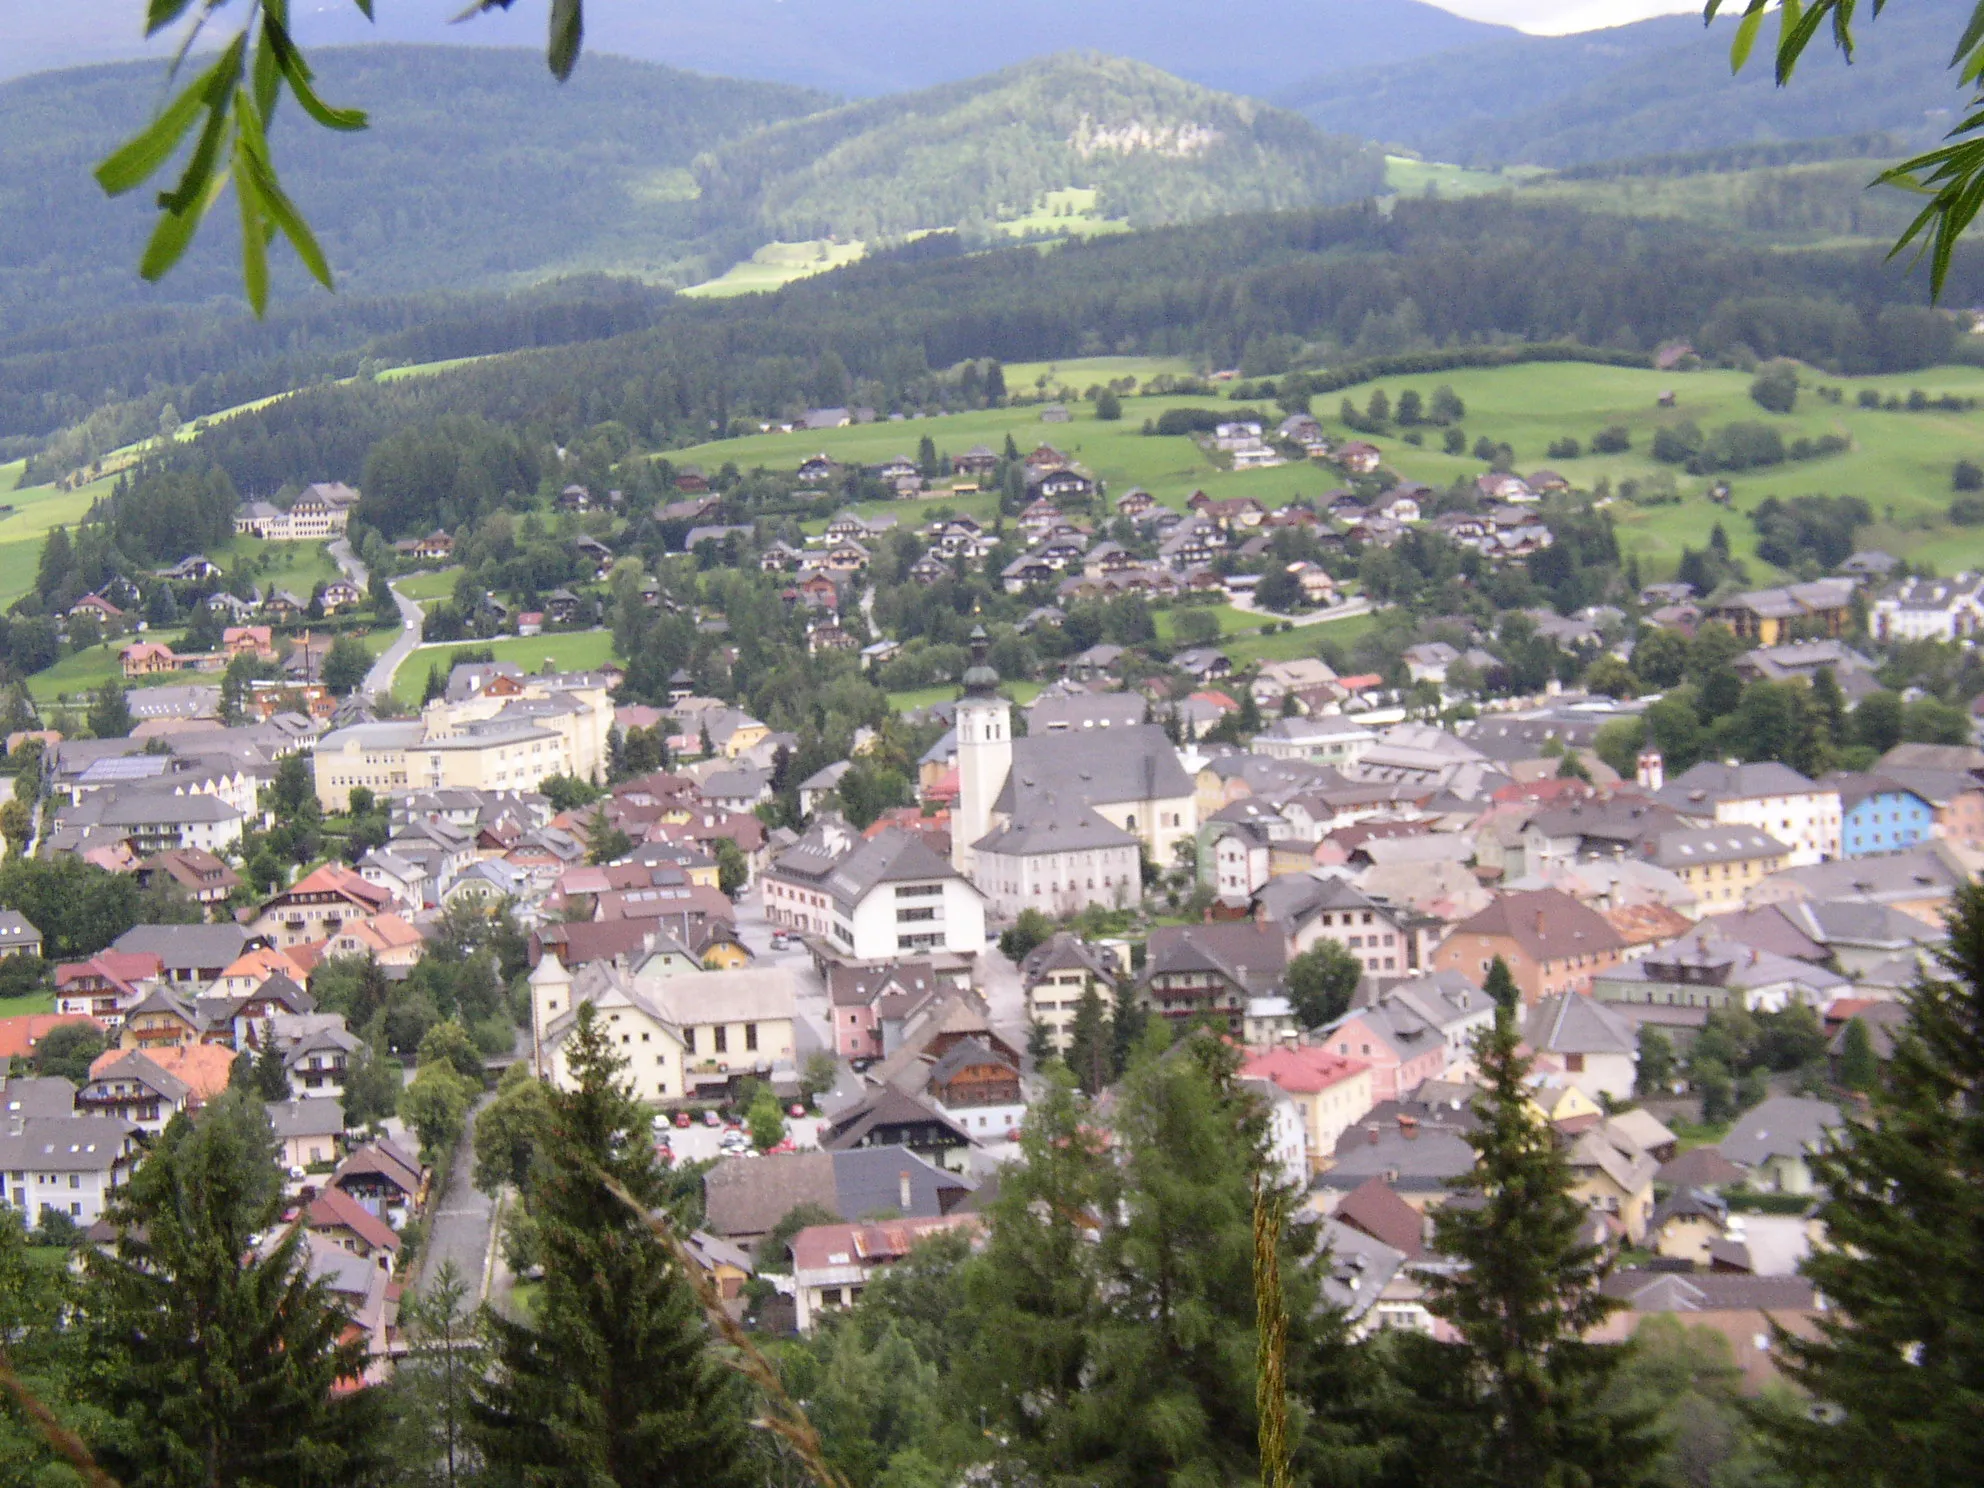 Photo showing: View of Tamsweg, seen from Saint Leonhard church